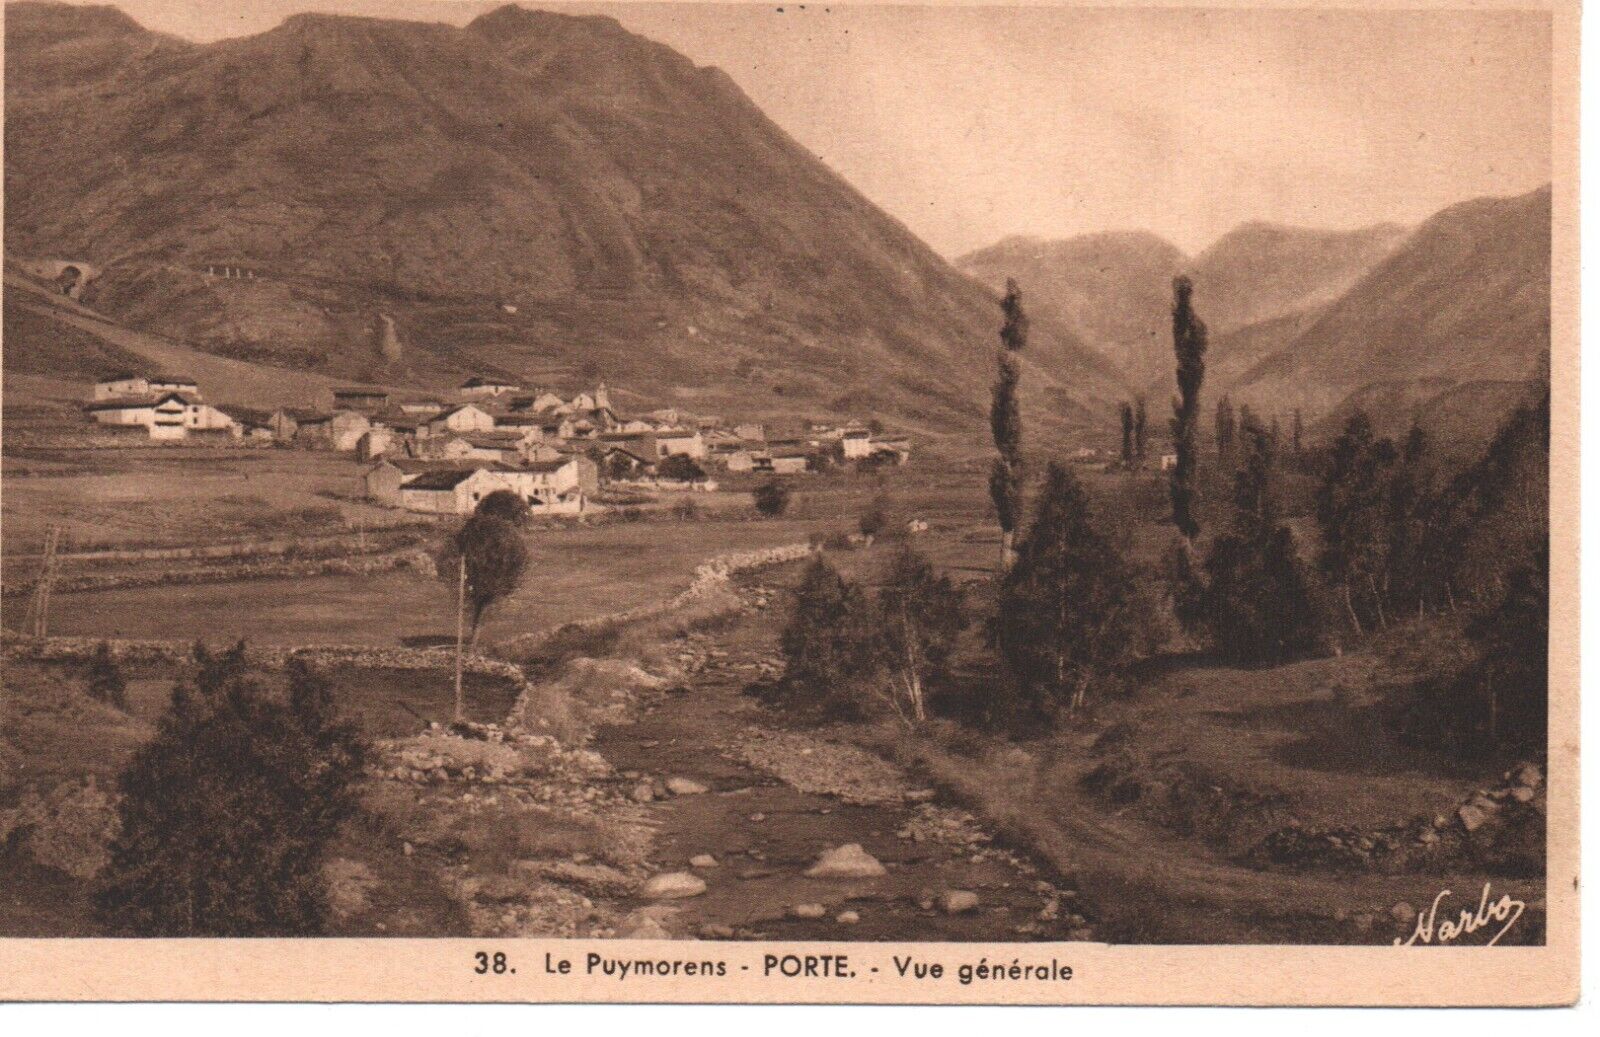 CPA - Le Puymorens - DOOR - general view